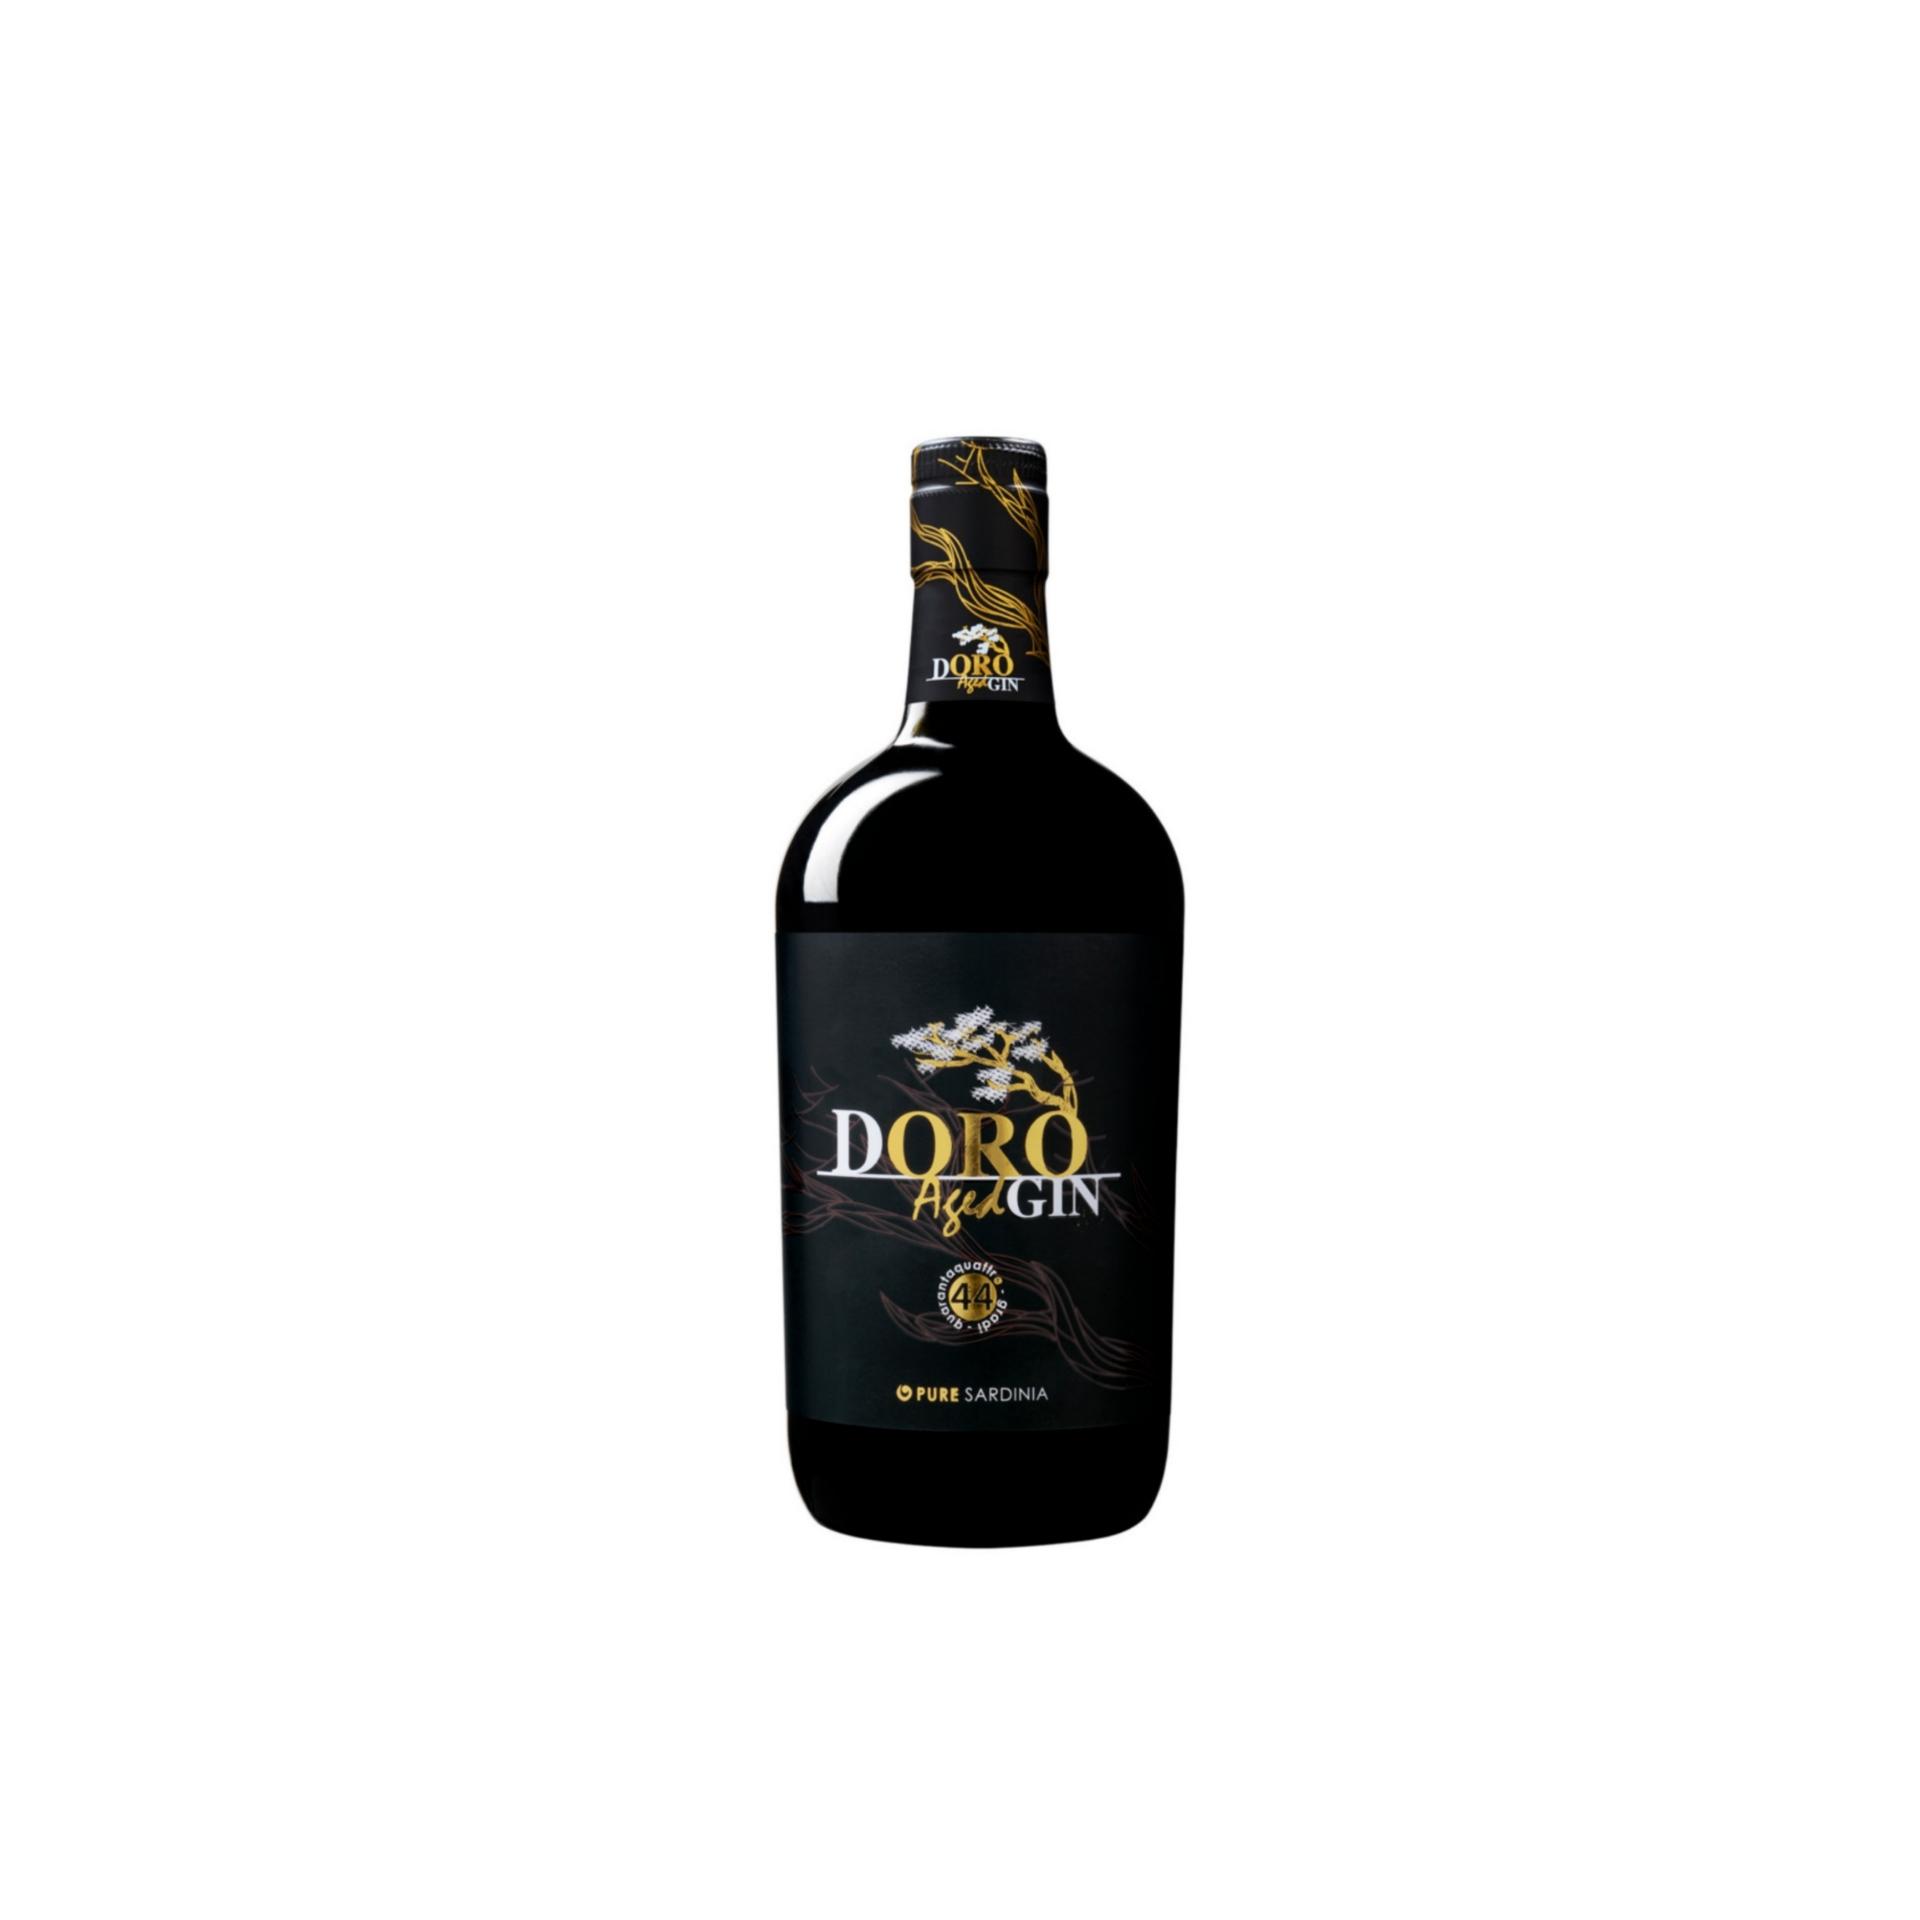 Doro Aged Gin Pure Sardinia 700 ml